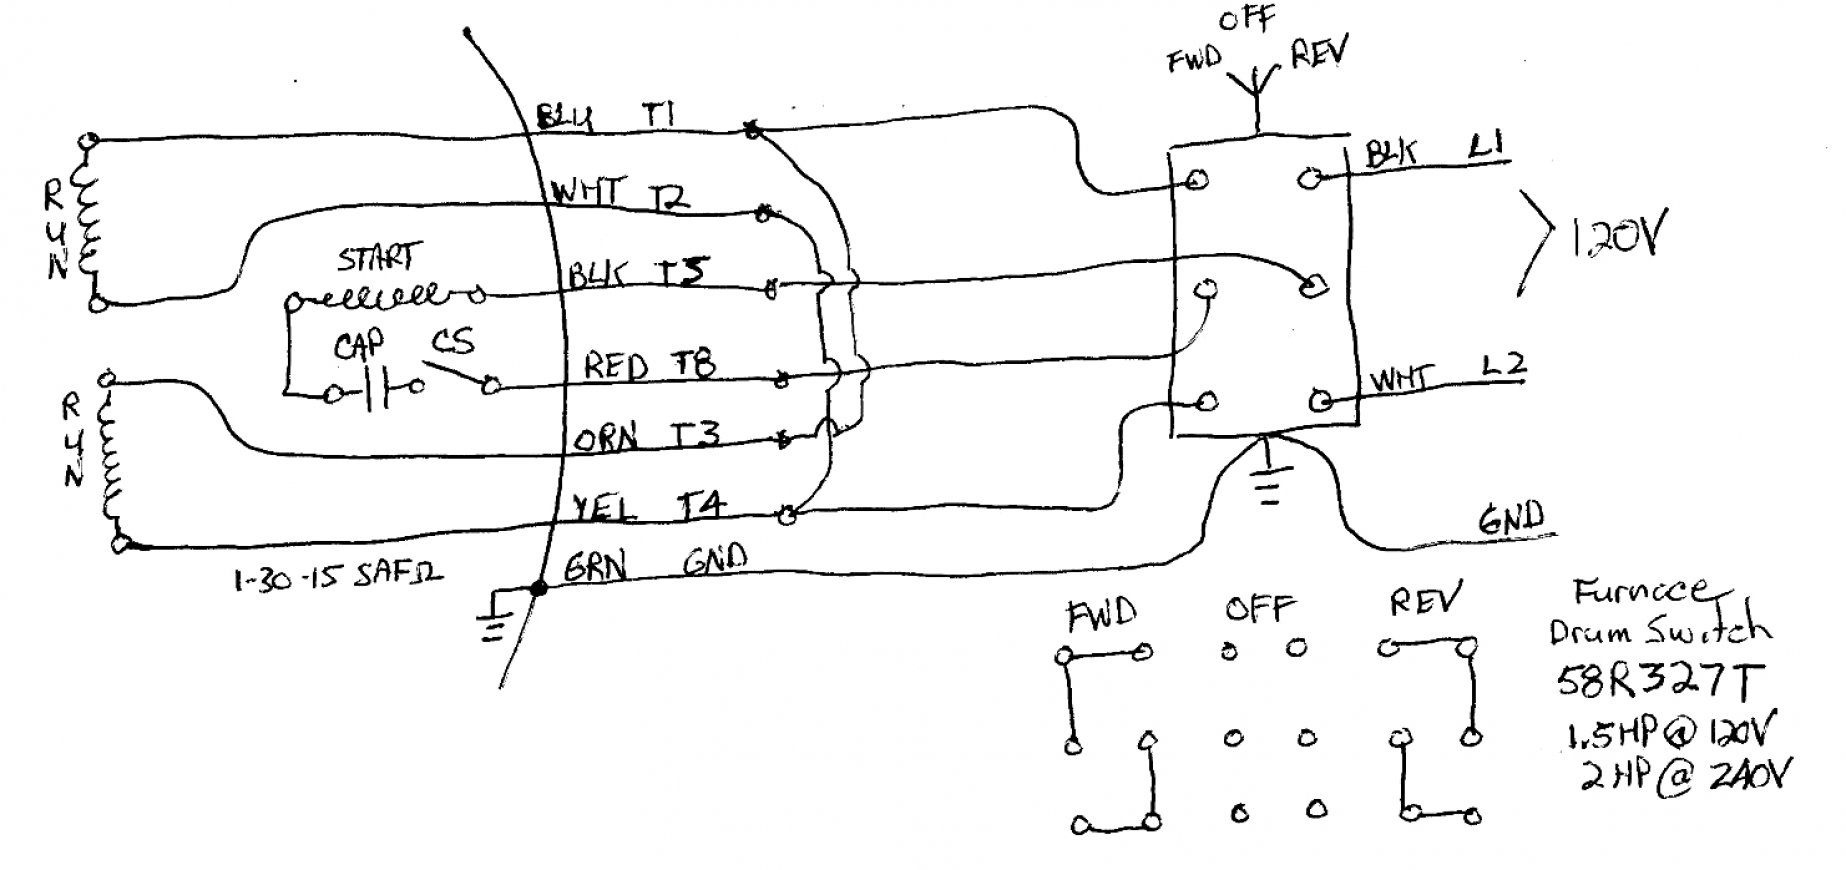 Reversible Drum Switch Wiring Diagram For South Bend Lathe | Wiring - Ac Motor Reversing Switch Wiring Diagram